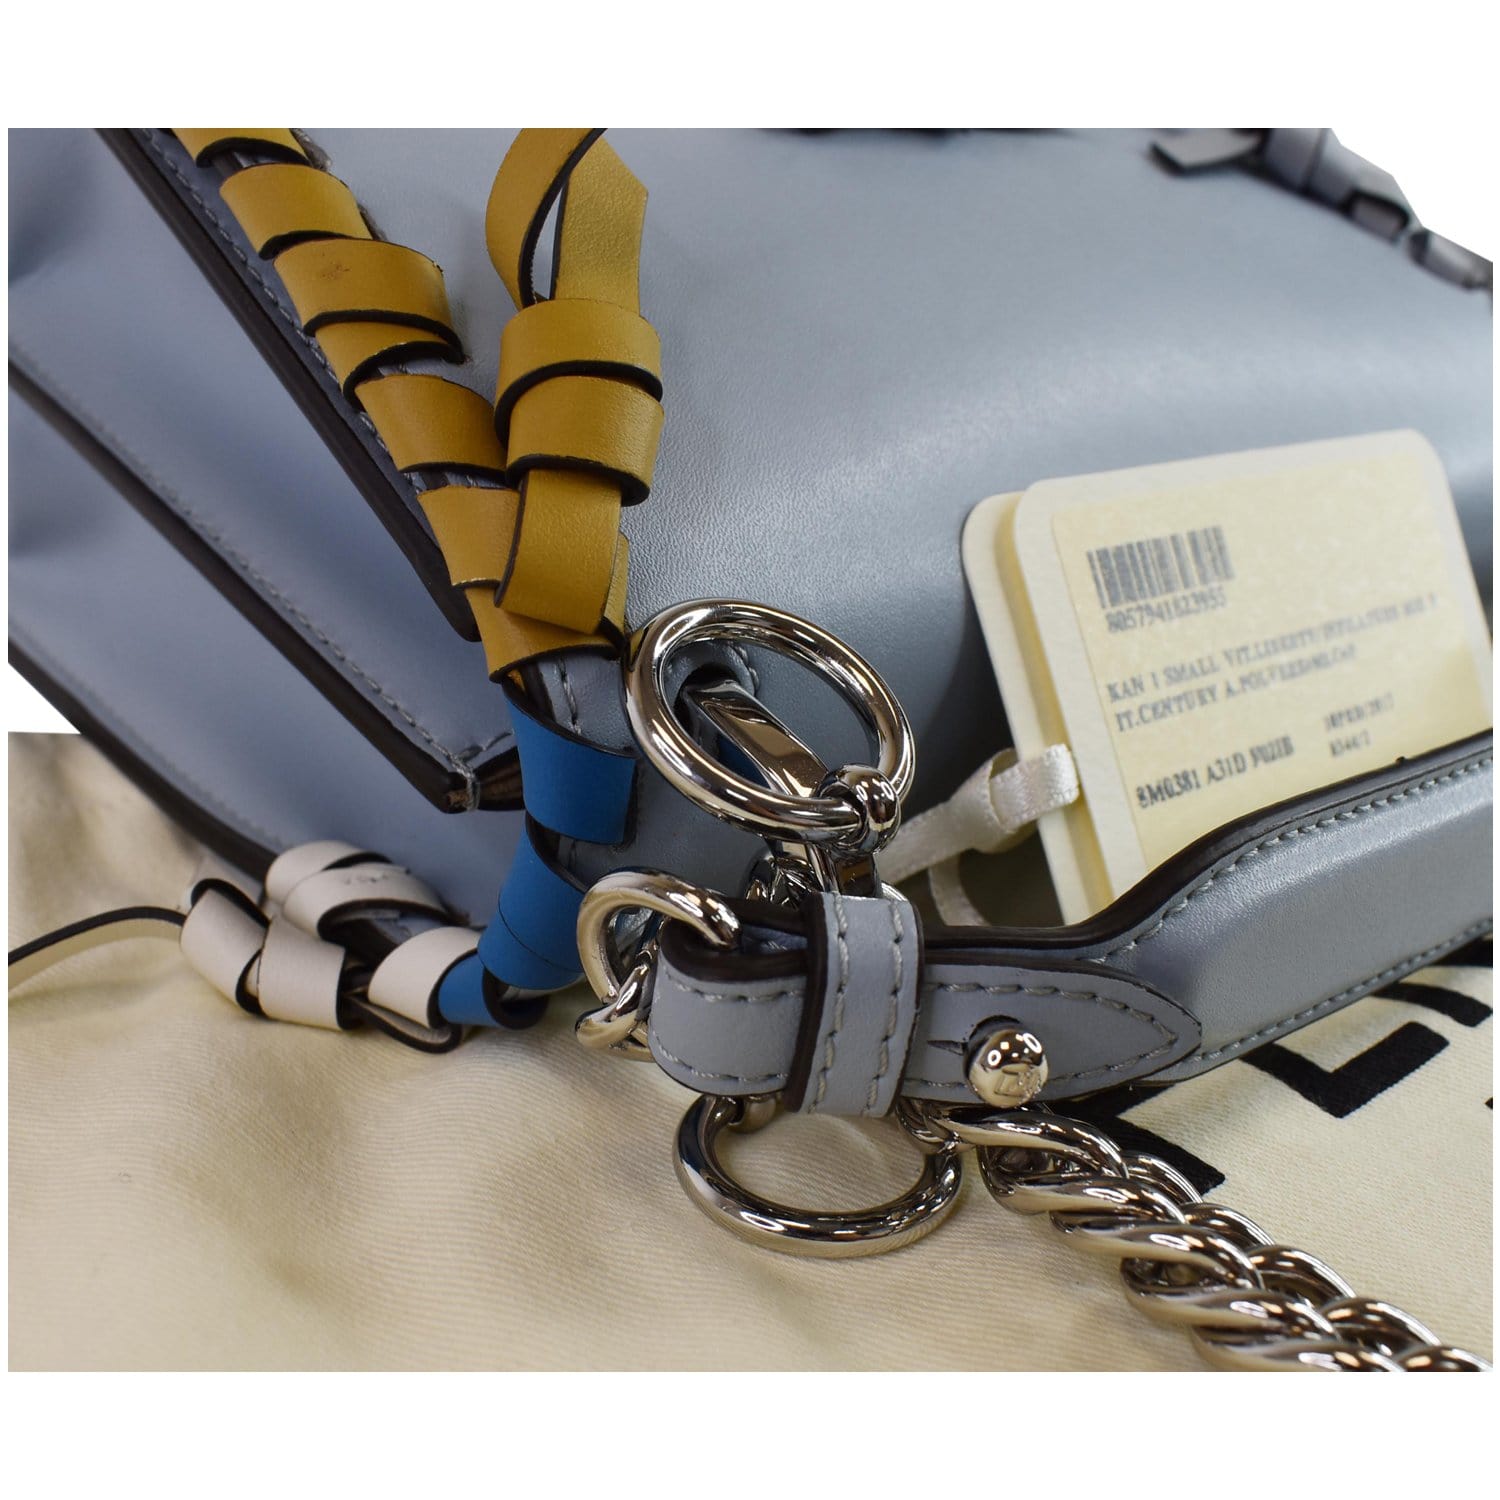 lufi_widayati - FENDI Speedy Canvas Handbag & Crossbody